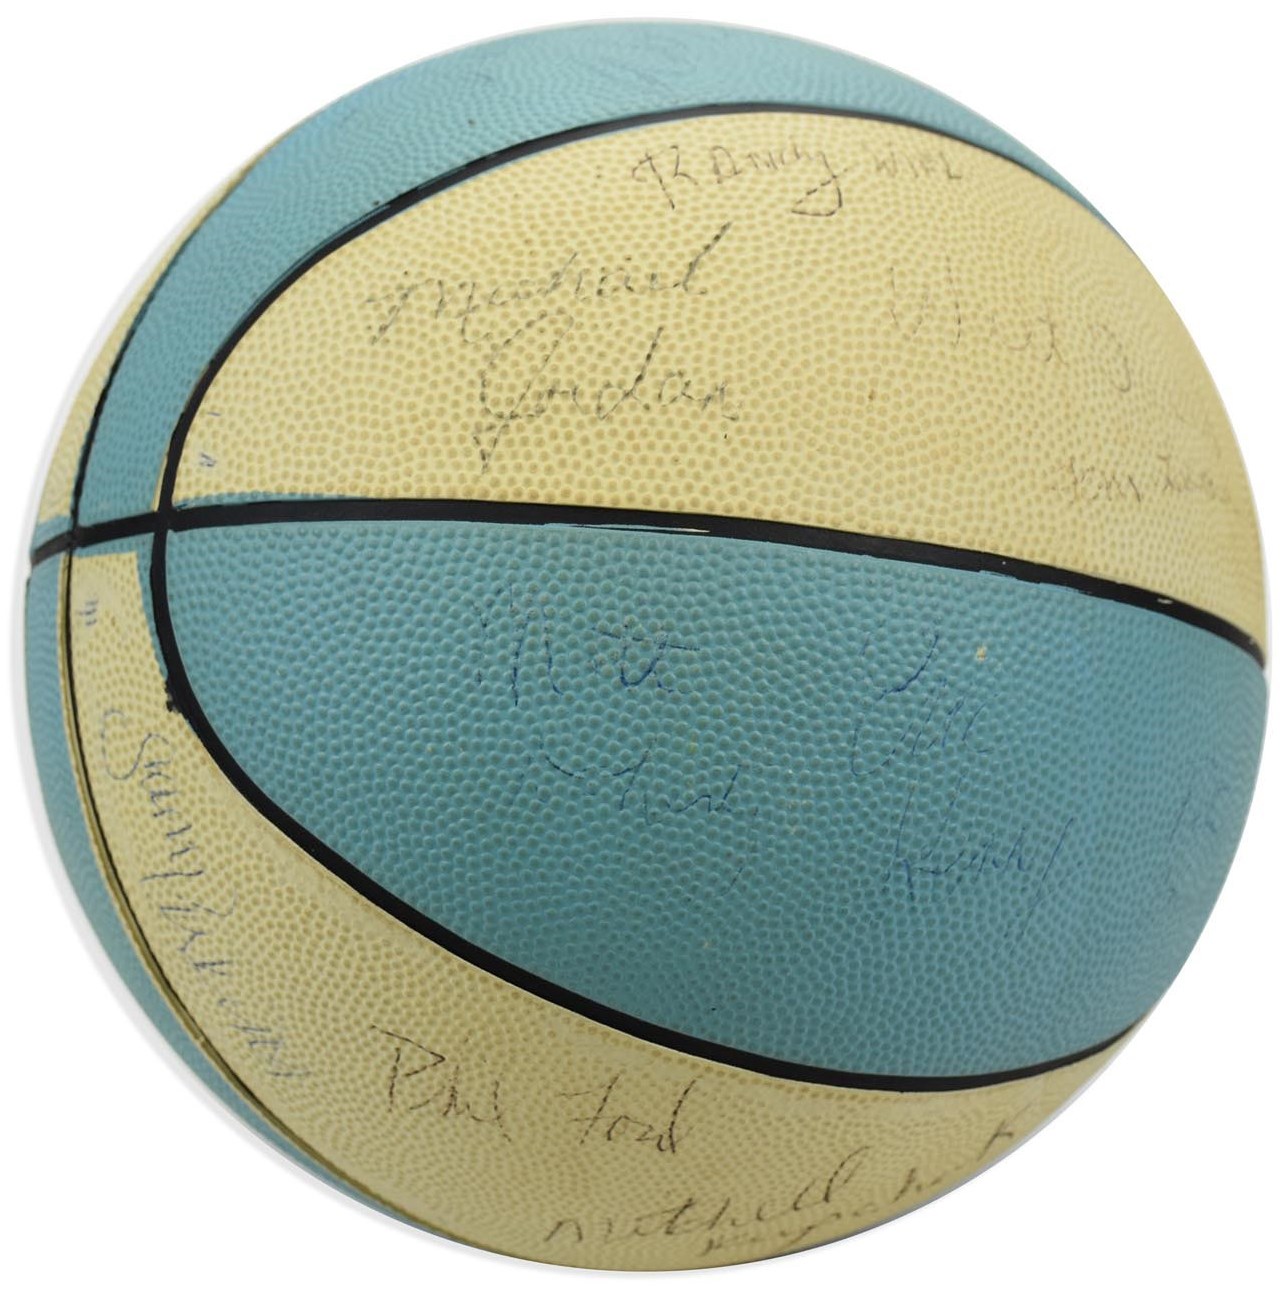 1970s-80s UNC Tar Heels Signed Basketball with Freshman Michael Jordan